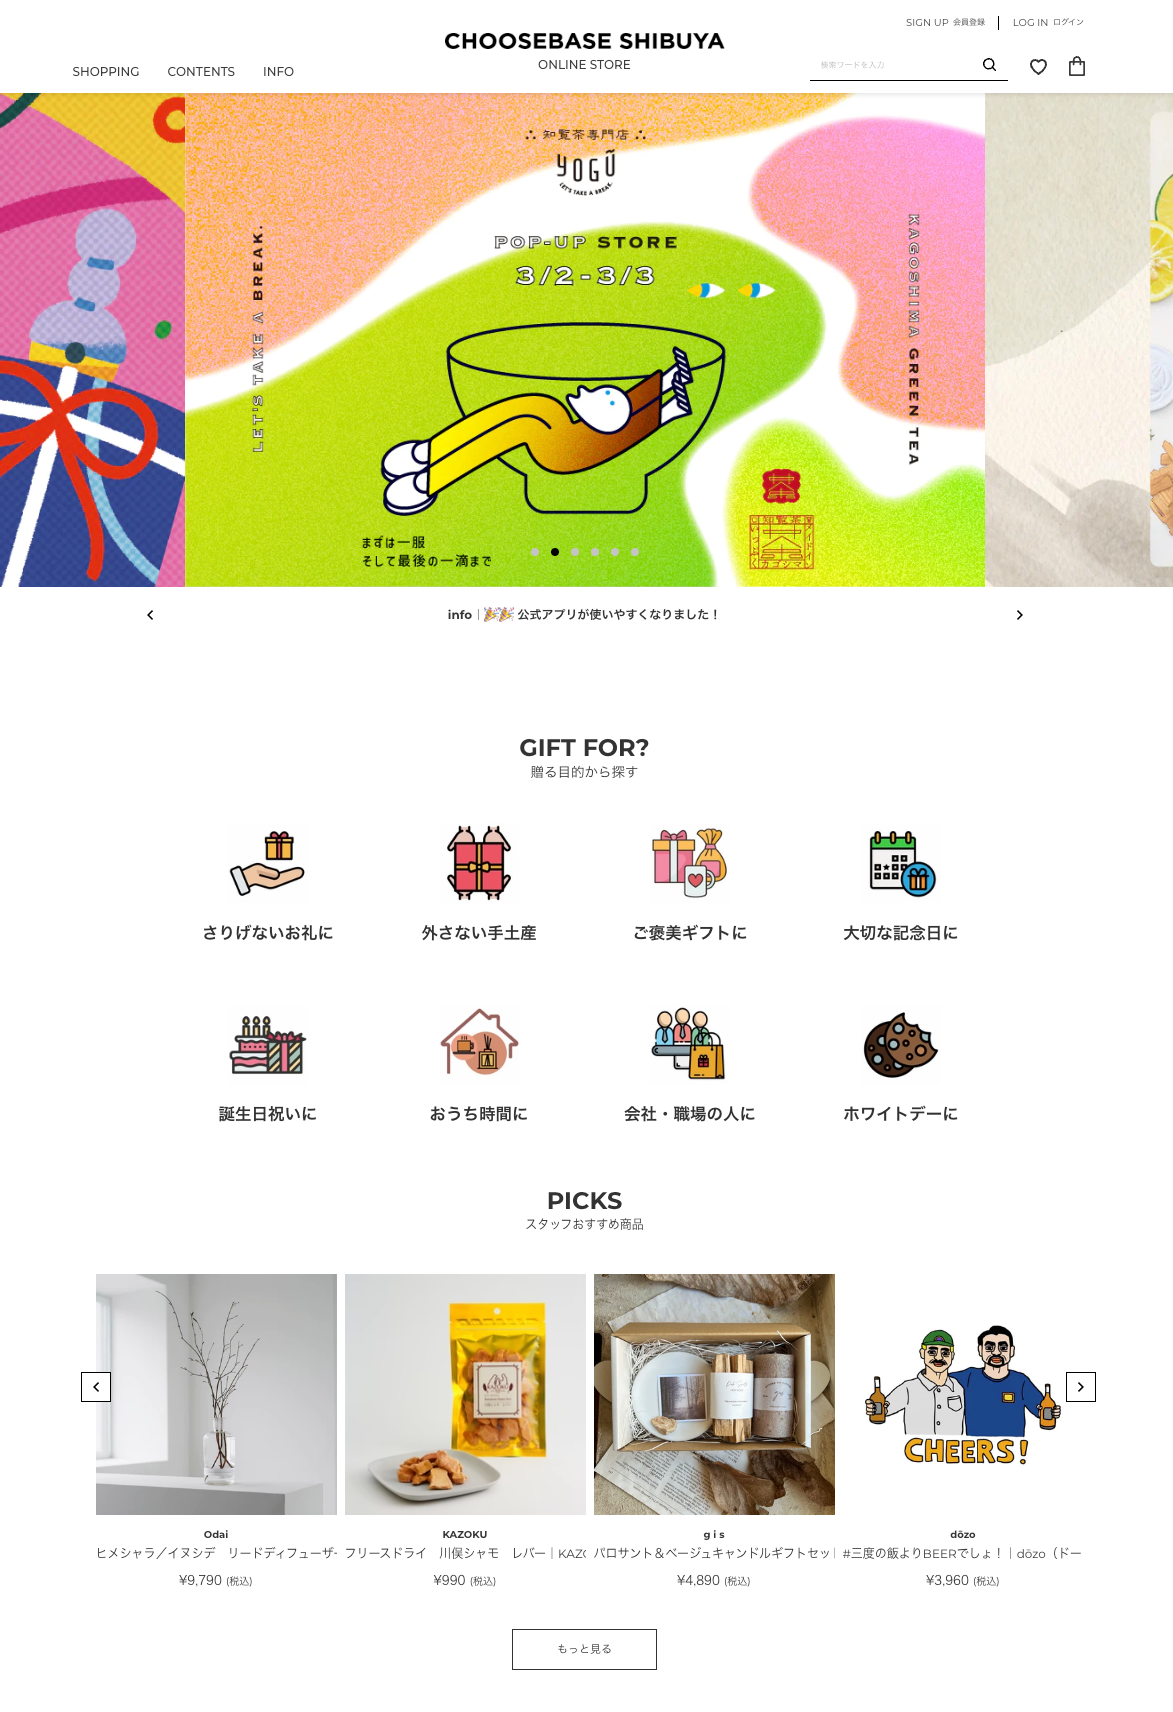 CHOOSEBASE SHIBUYA公式サイトにもバナーが公開されています。